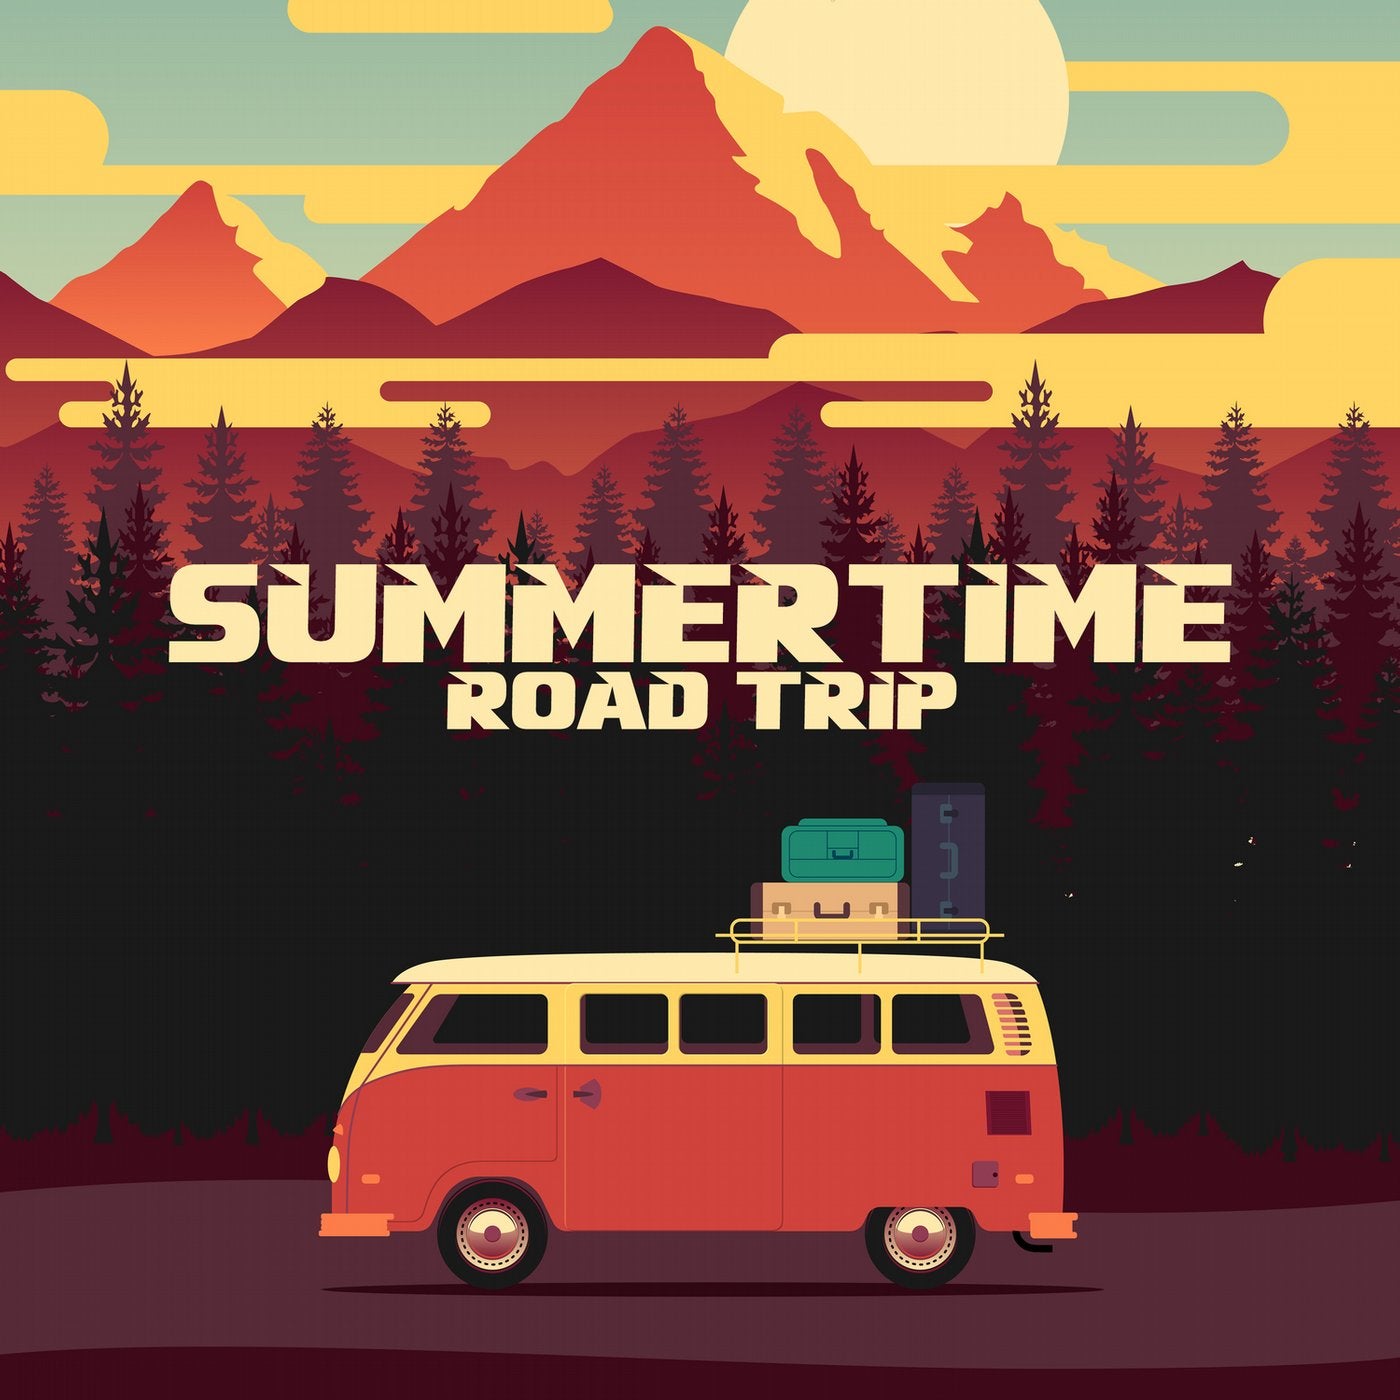 Summertime Road Trip